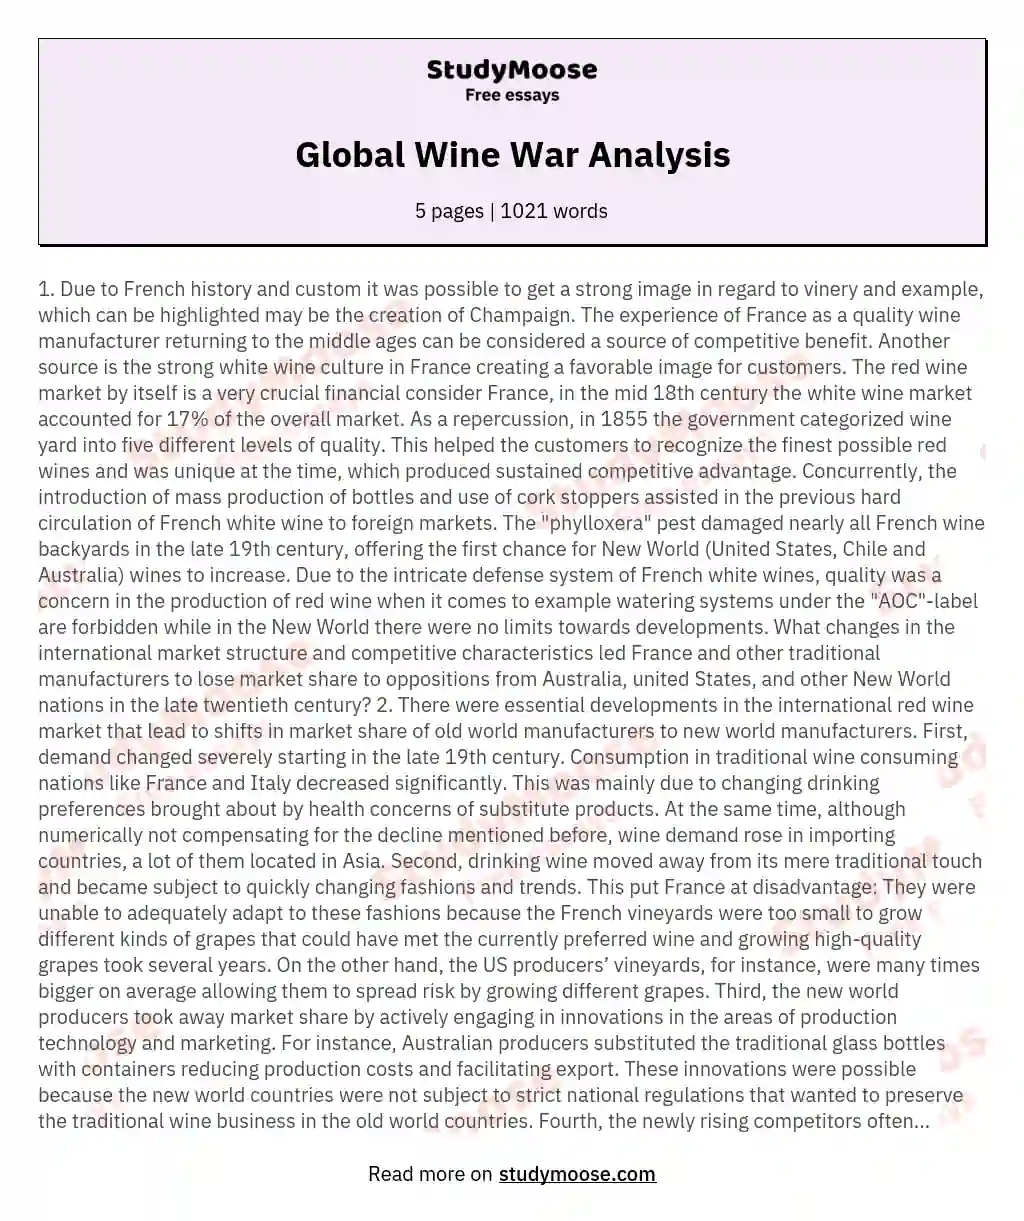 Global Wine War Analysis essay